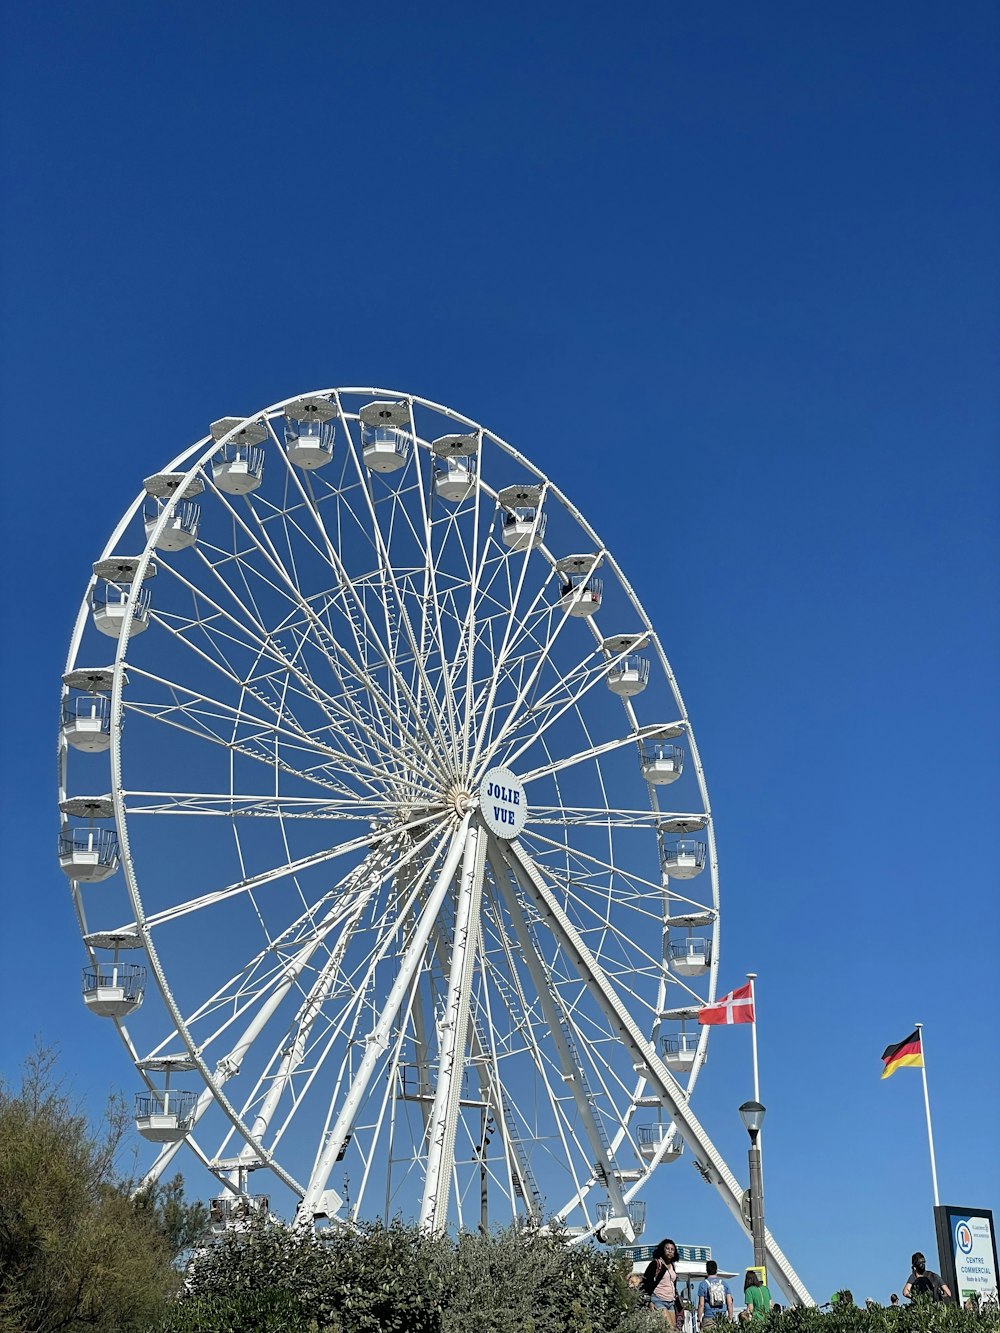 roda gigante branca sob o céu azul durante o dia